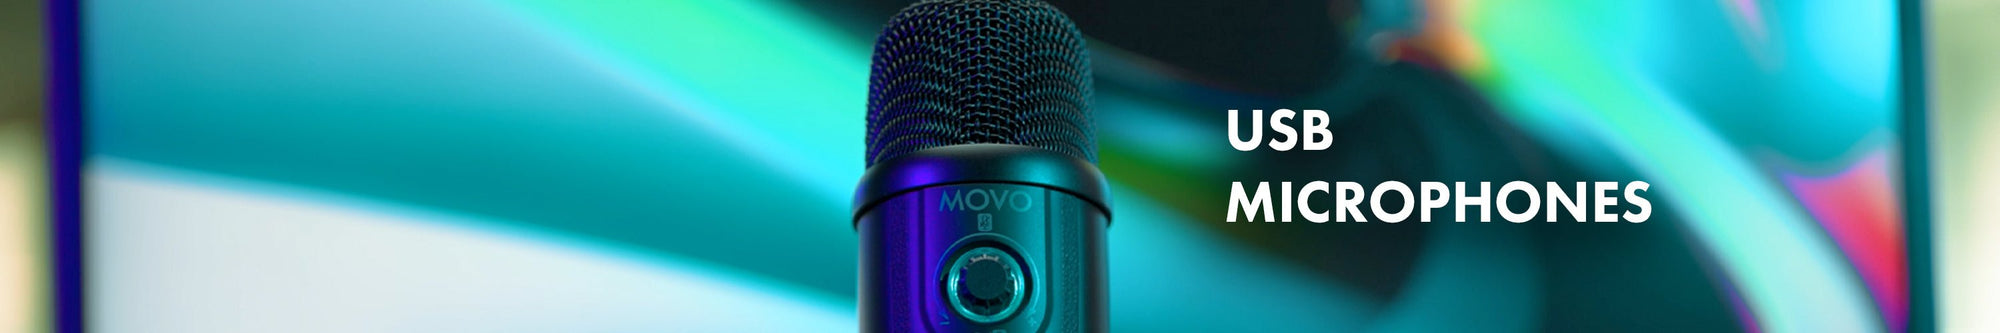 USB Microphones - Movo